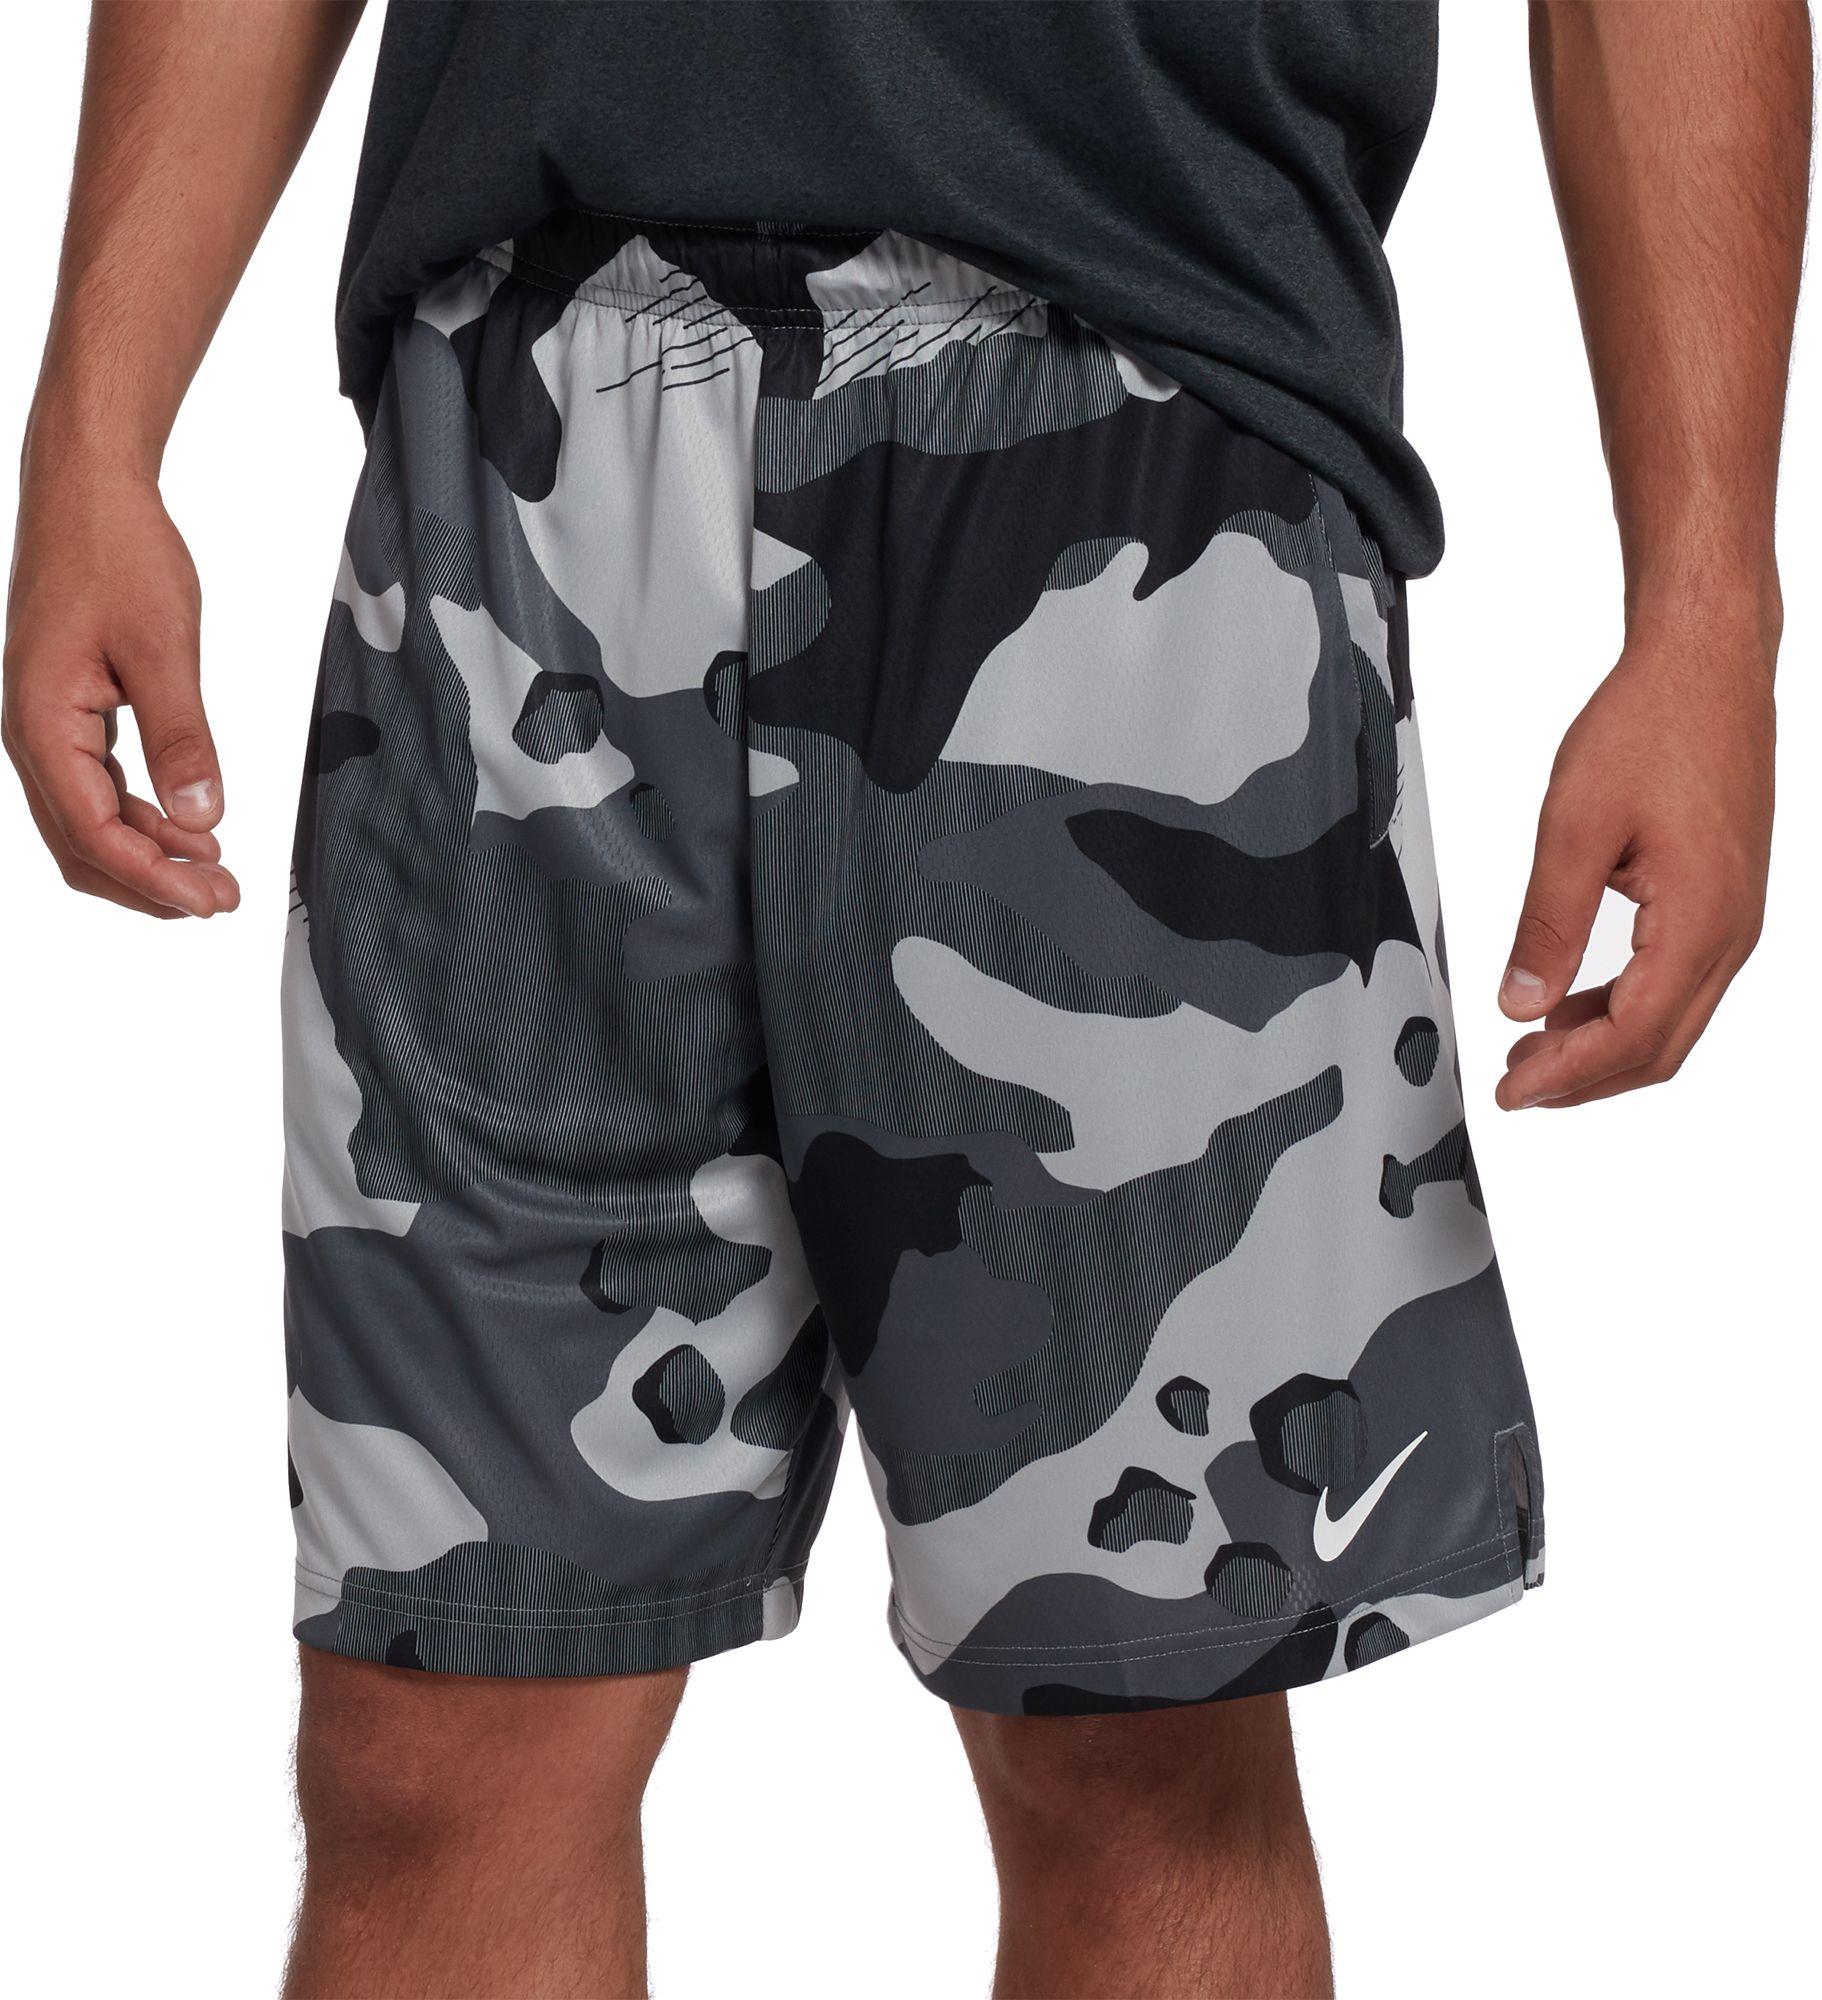 Nike Dri-fit Camo Training Shorts in lt/Smoke/Grey/White (Gray) for Men - Lyst